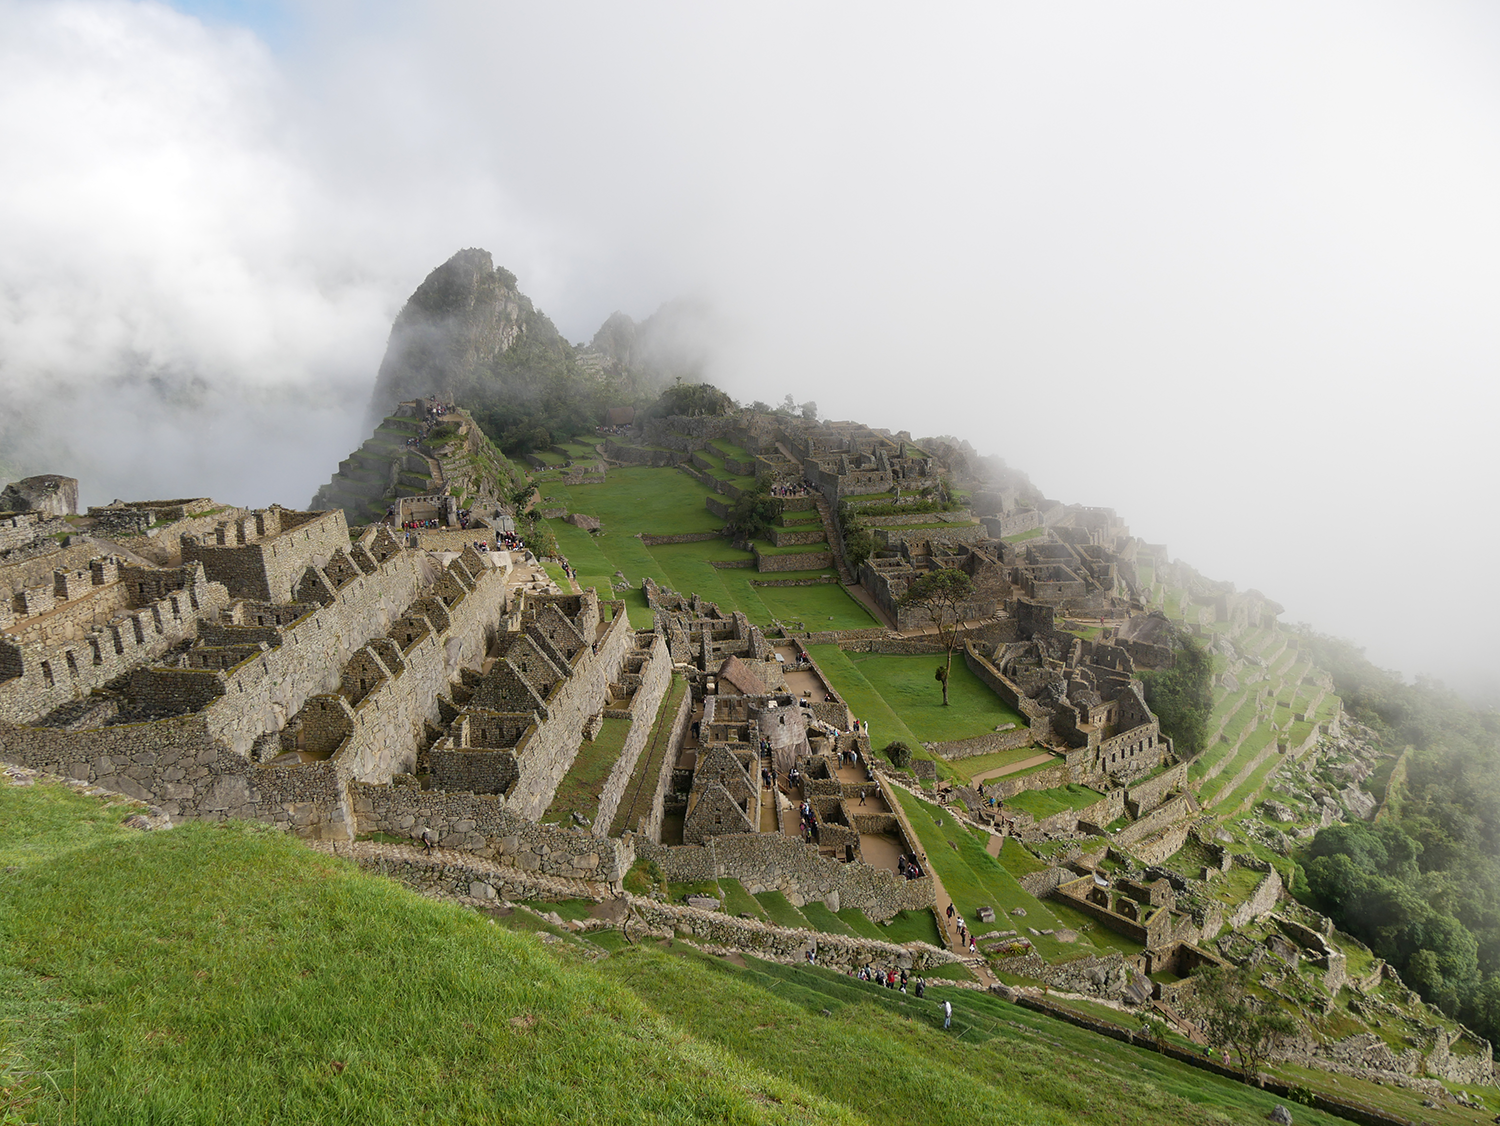 The Incan city of Machu Picchu